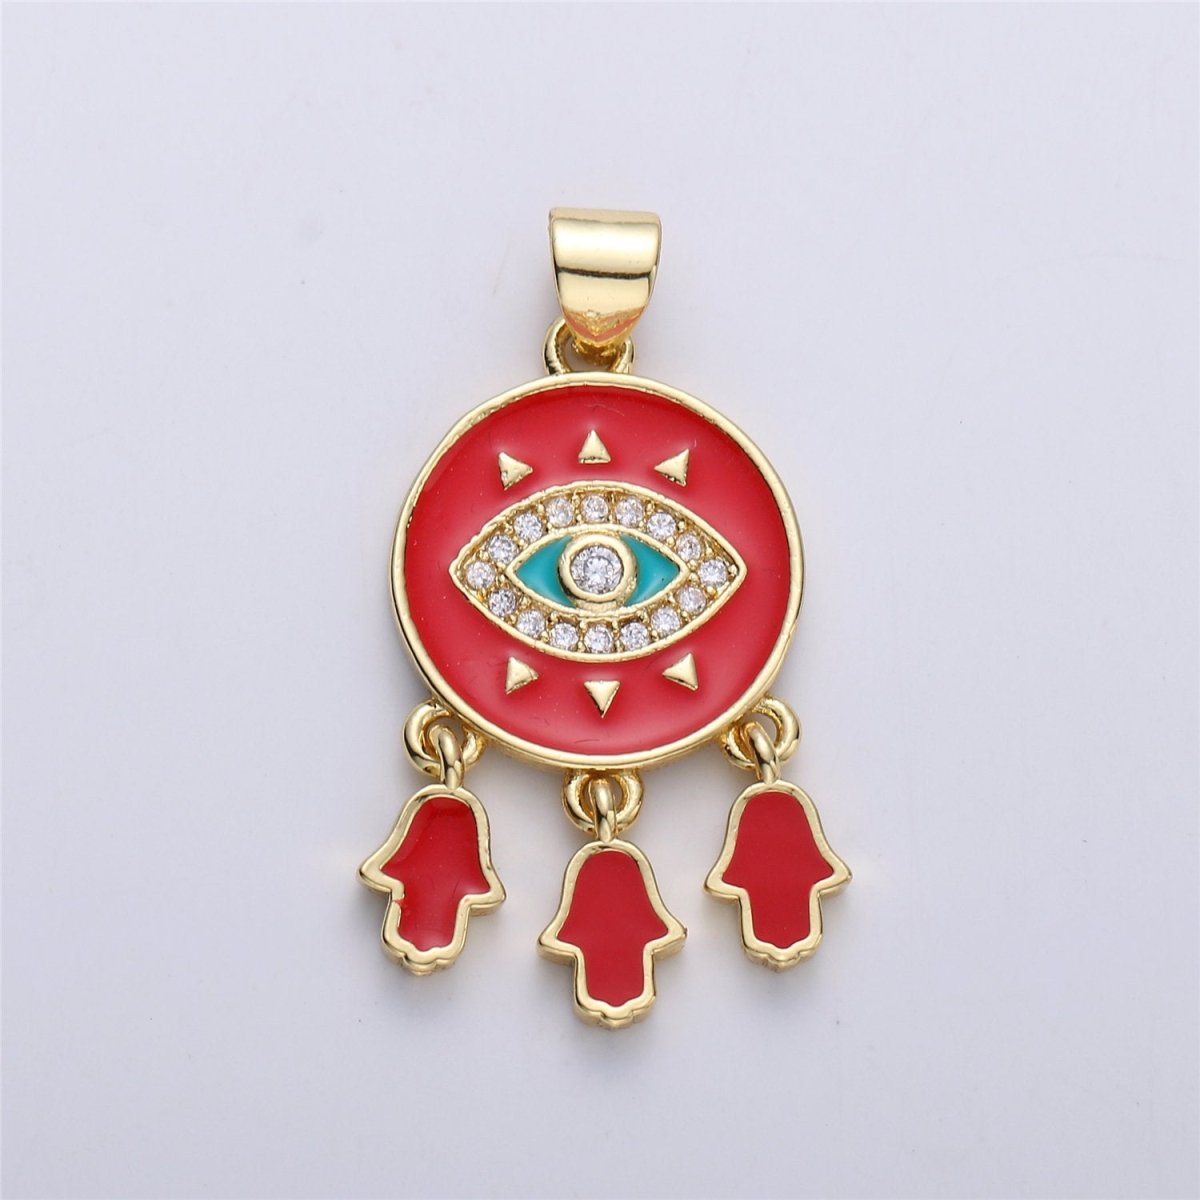 Enamel Coin Pendant Evil eye charm, Black White Red Enamel Pendant, Enamel Evil Eye with Hamsa Hand Charm protection eye jewelery, 31x16mm I-173 - DLUXCA